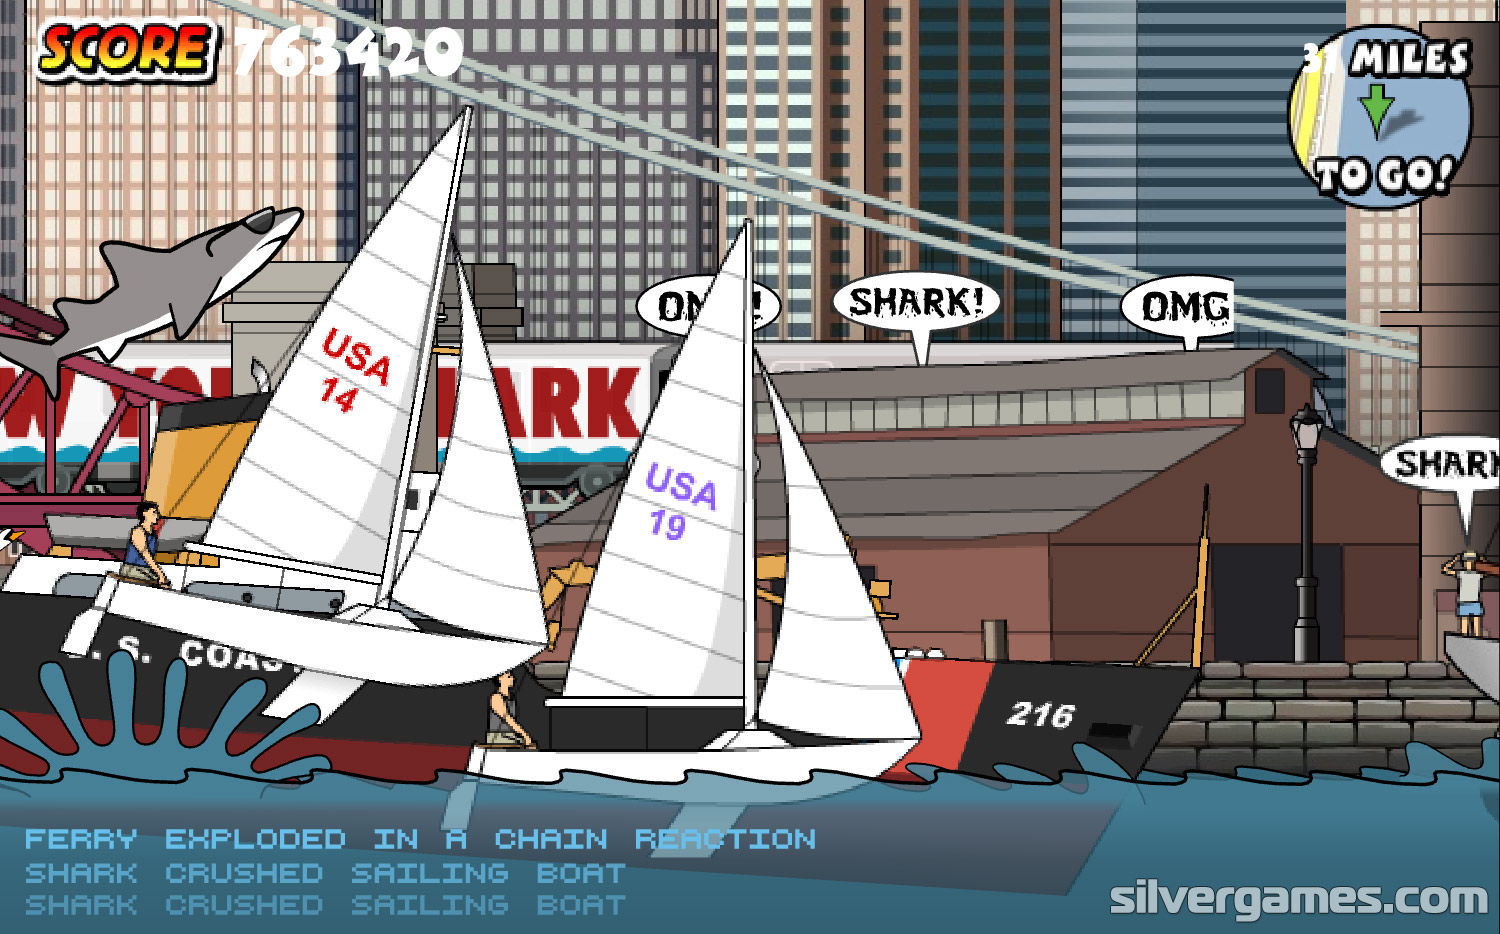 NEW YORK SHARK free online game on